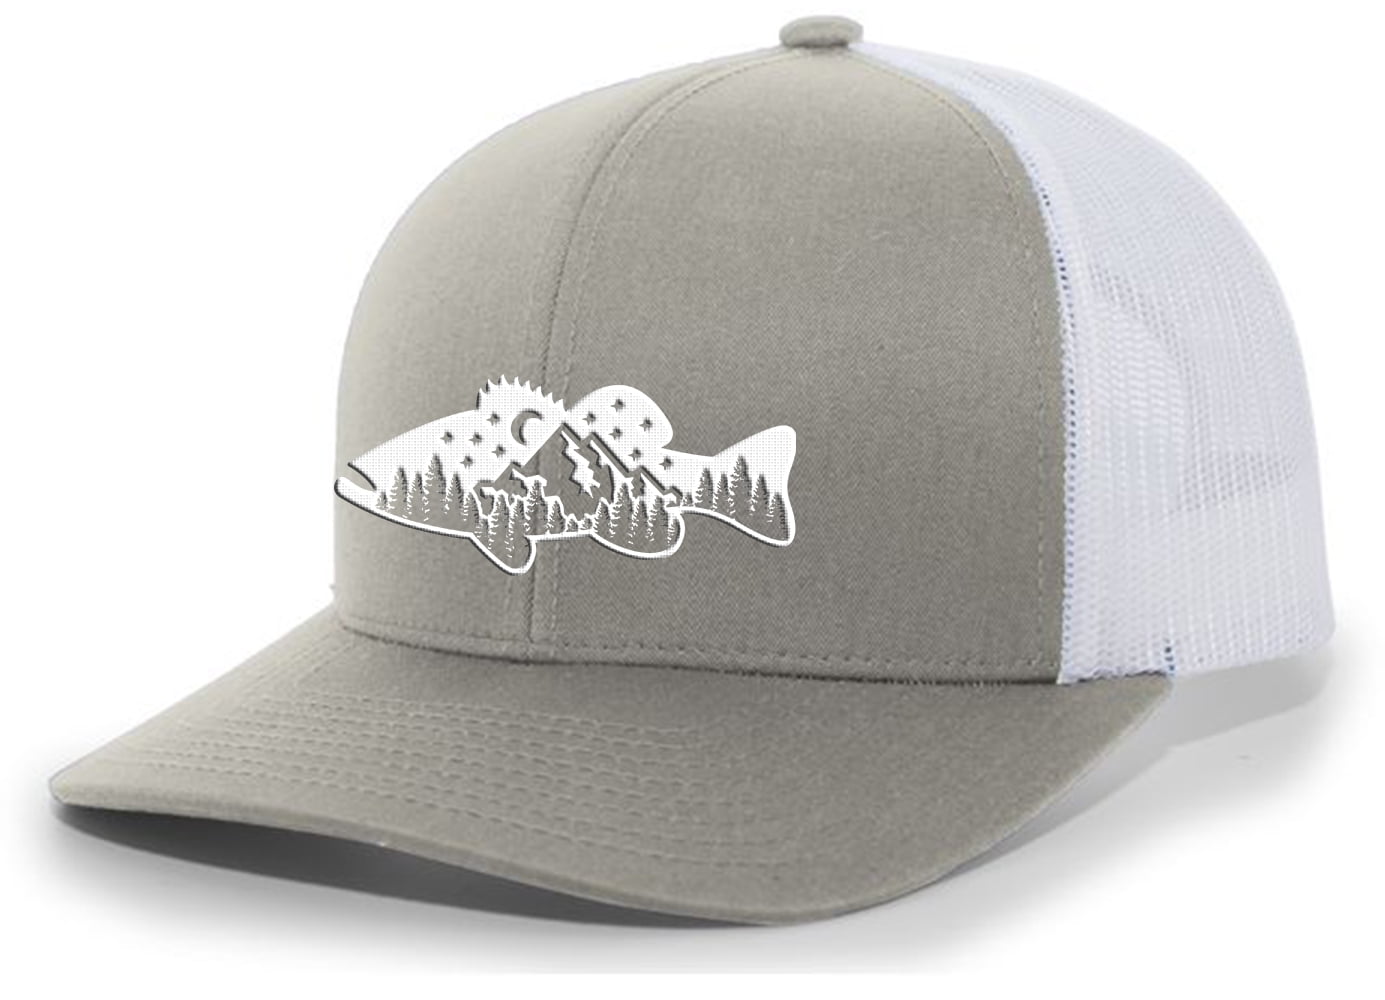 Vintage 90s Trout Fishing Cap Hat White Worn Ajustable